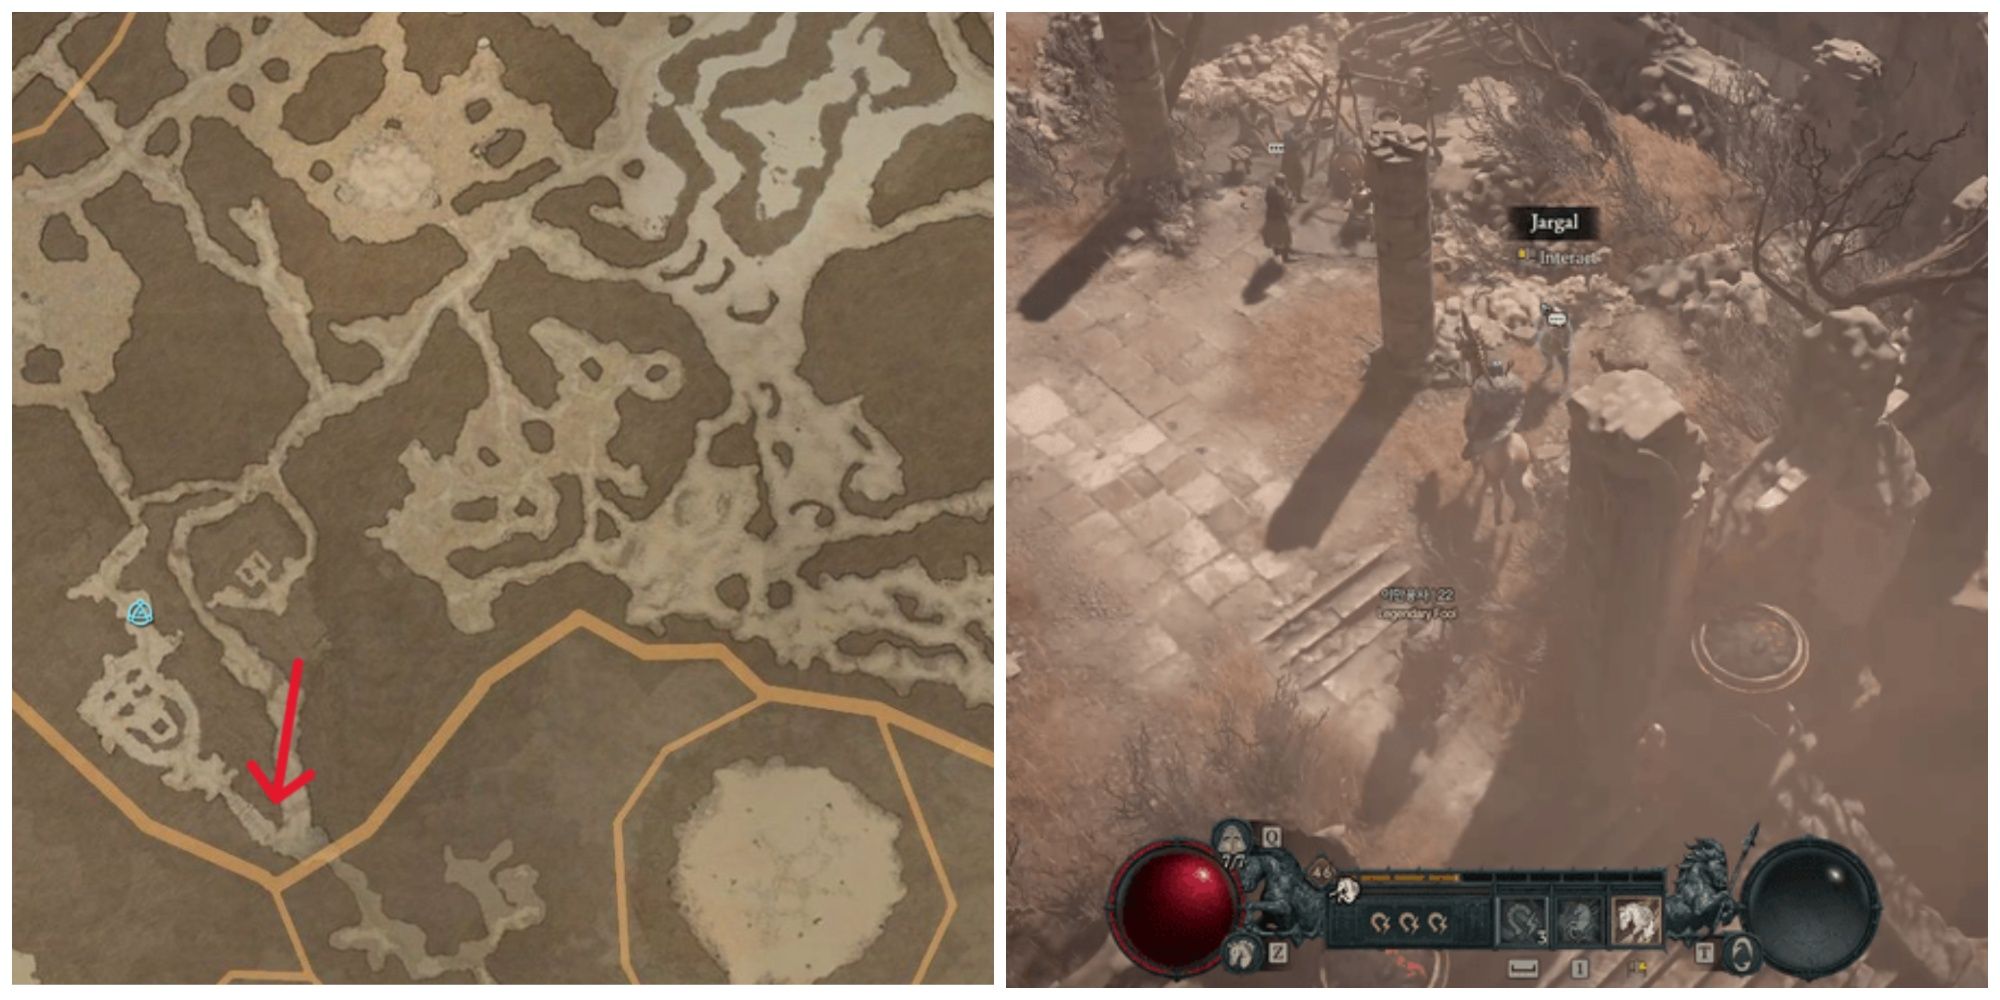 Map showing the location of Jargal, the quest giver for the Diablo 4 Salt Begets Salt side quest